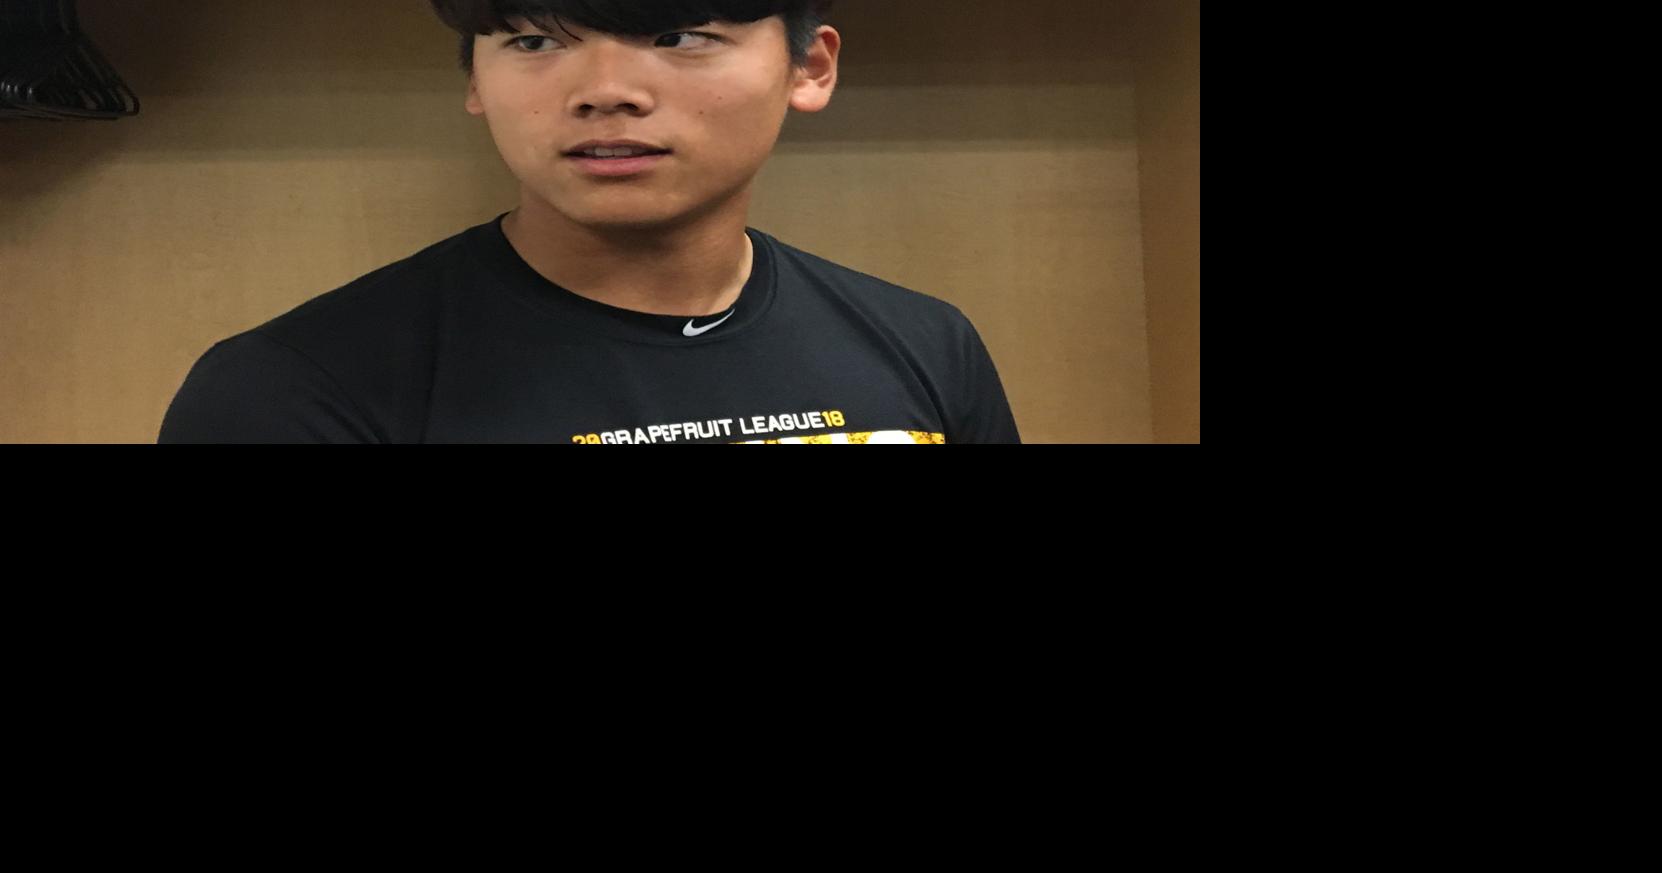 Ji-hwan Bae Saves the Day Shirt, Pittsburgh -MLBPA Licensed- BreakingT